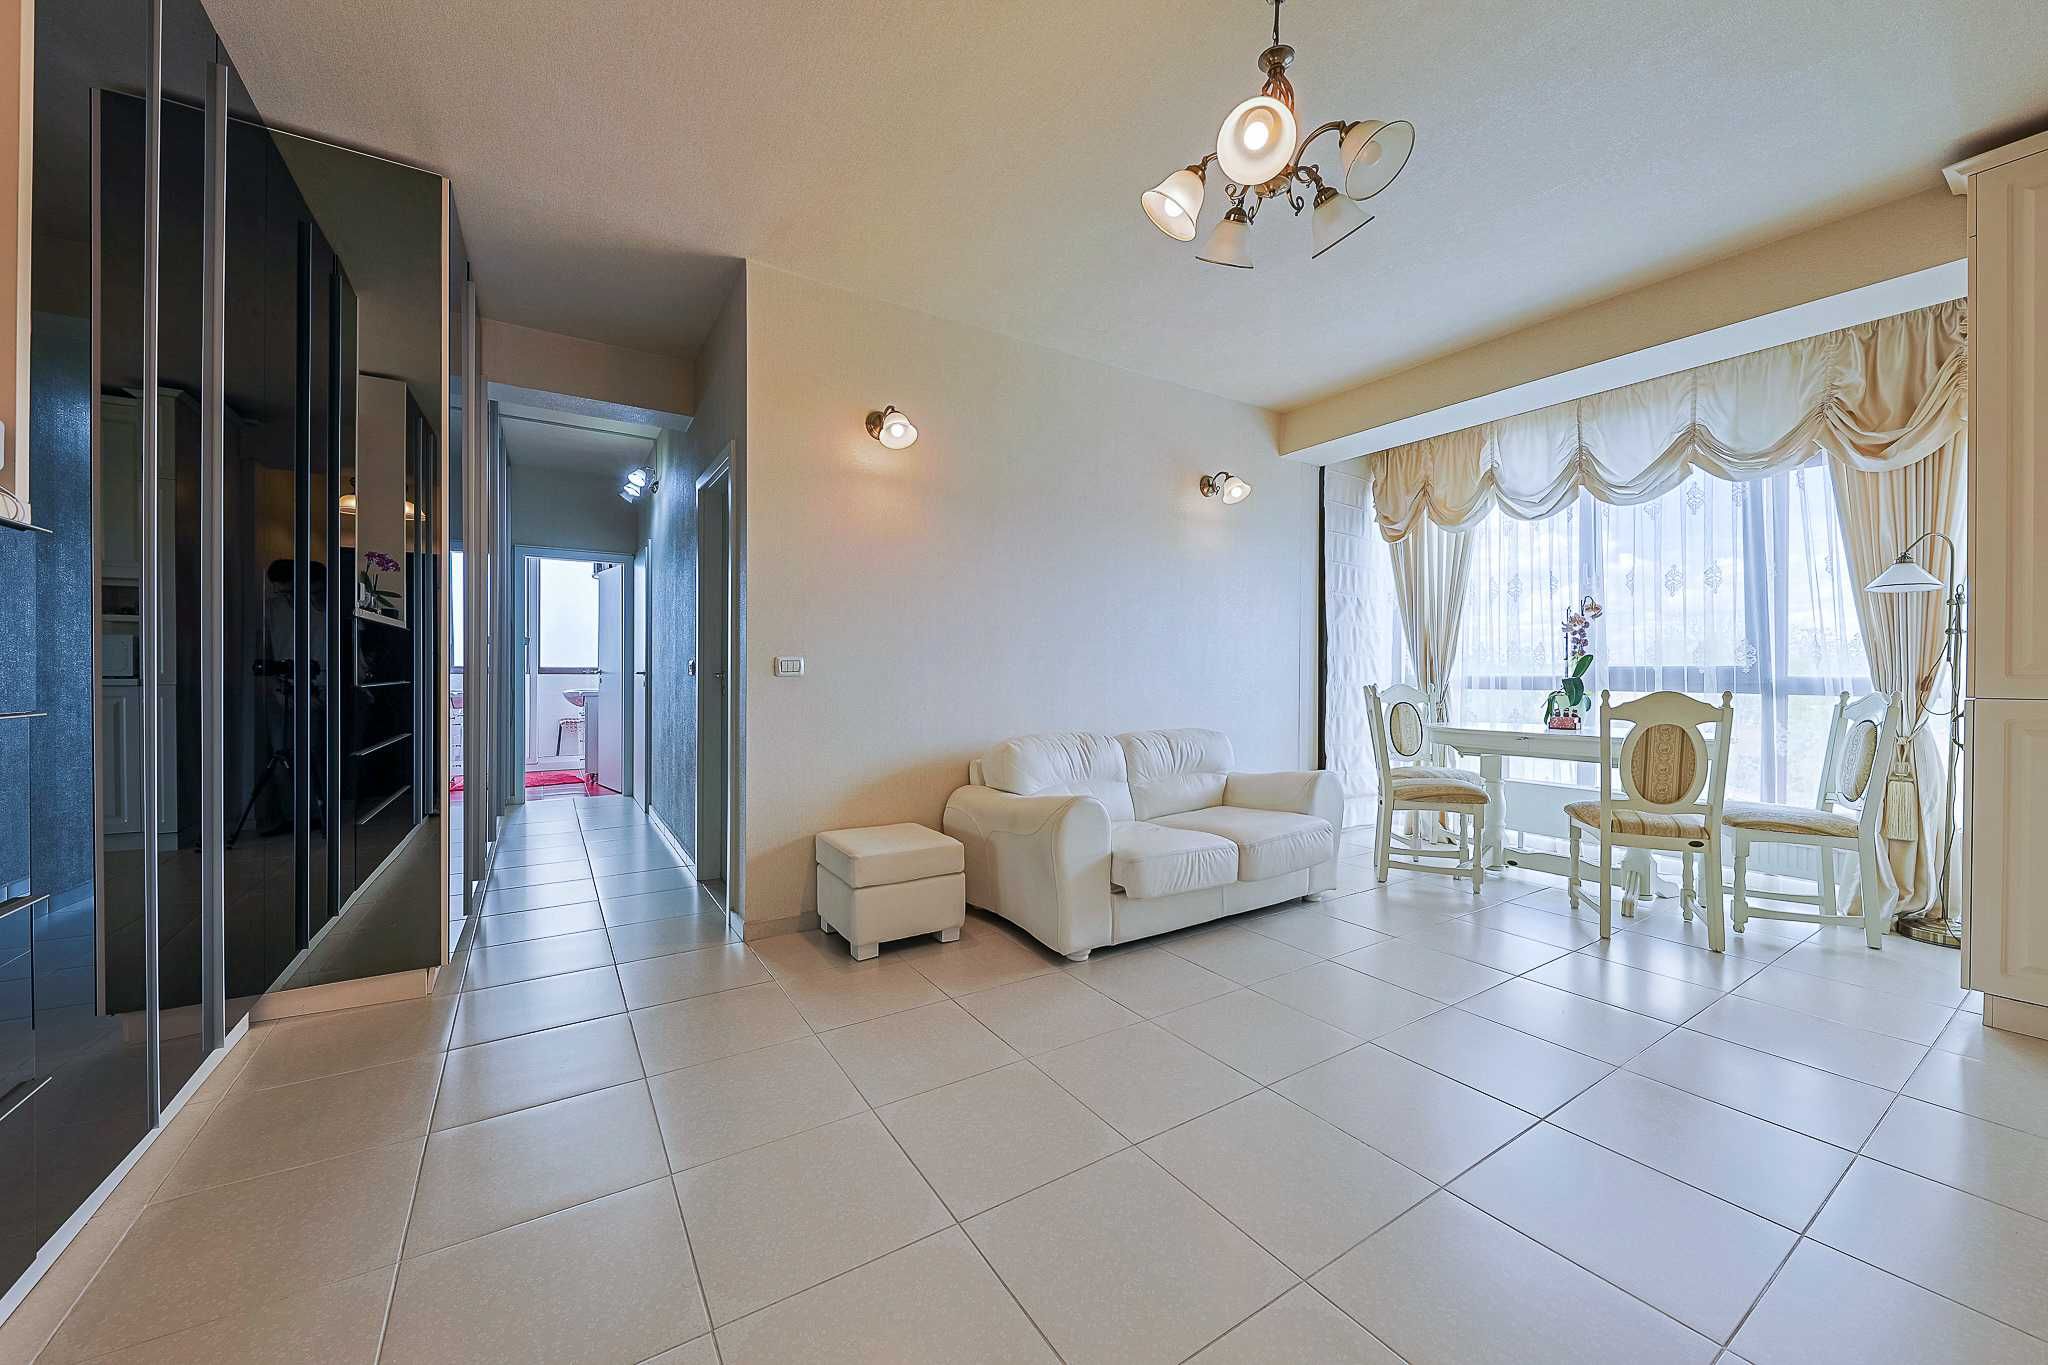 Vanzare apartament lux 3 camere, zona Telegrafului/Badea Cartan.